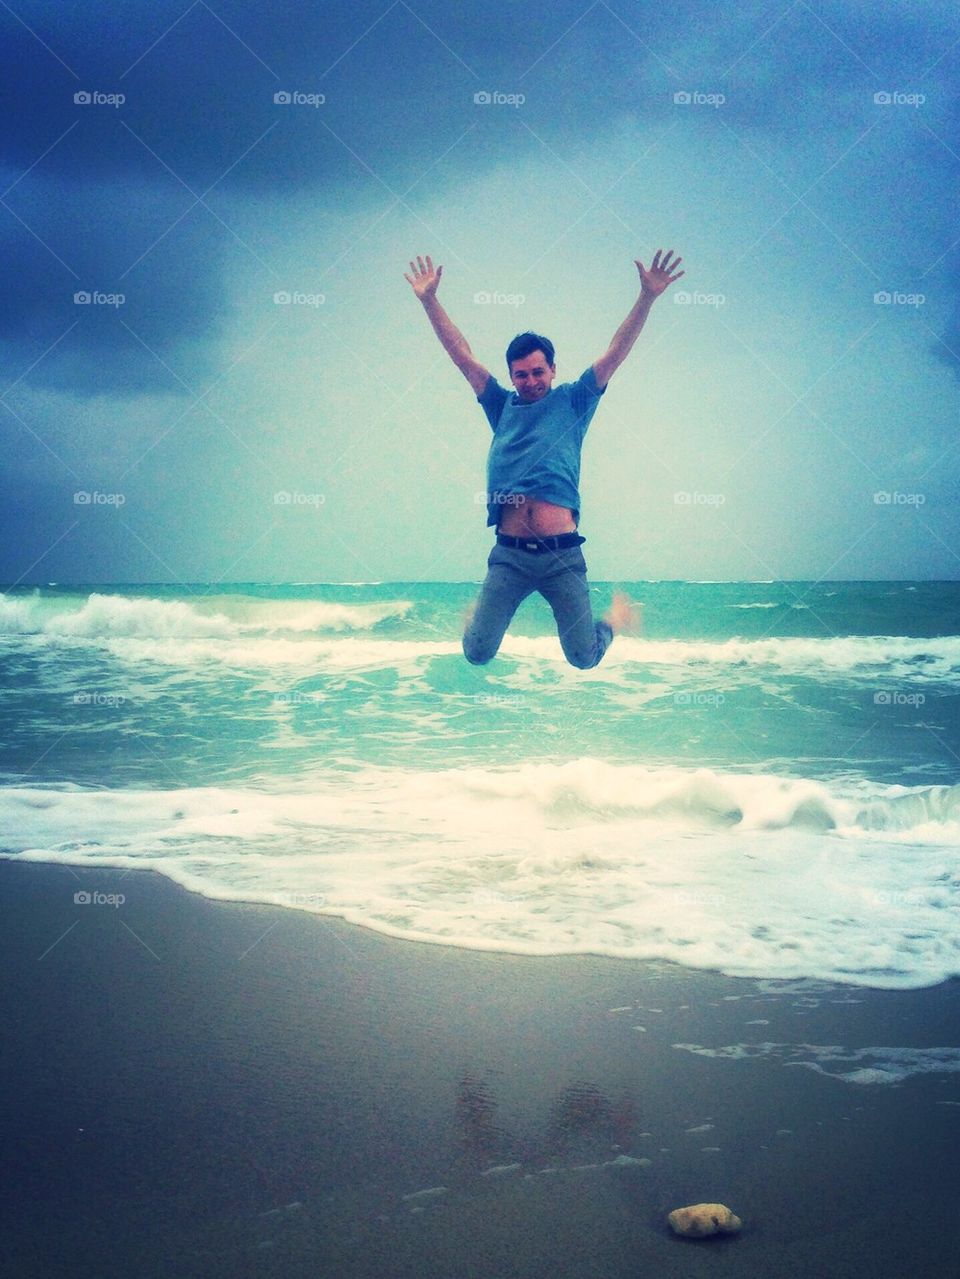 Jumping high, Florida